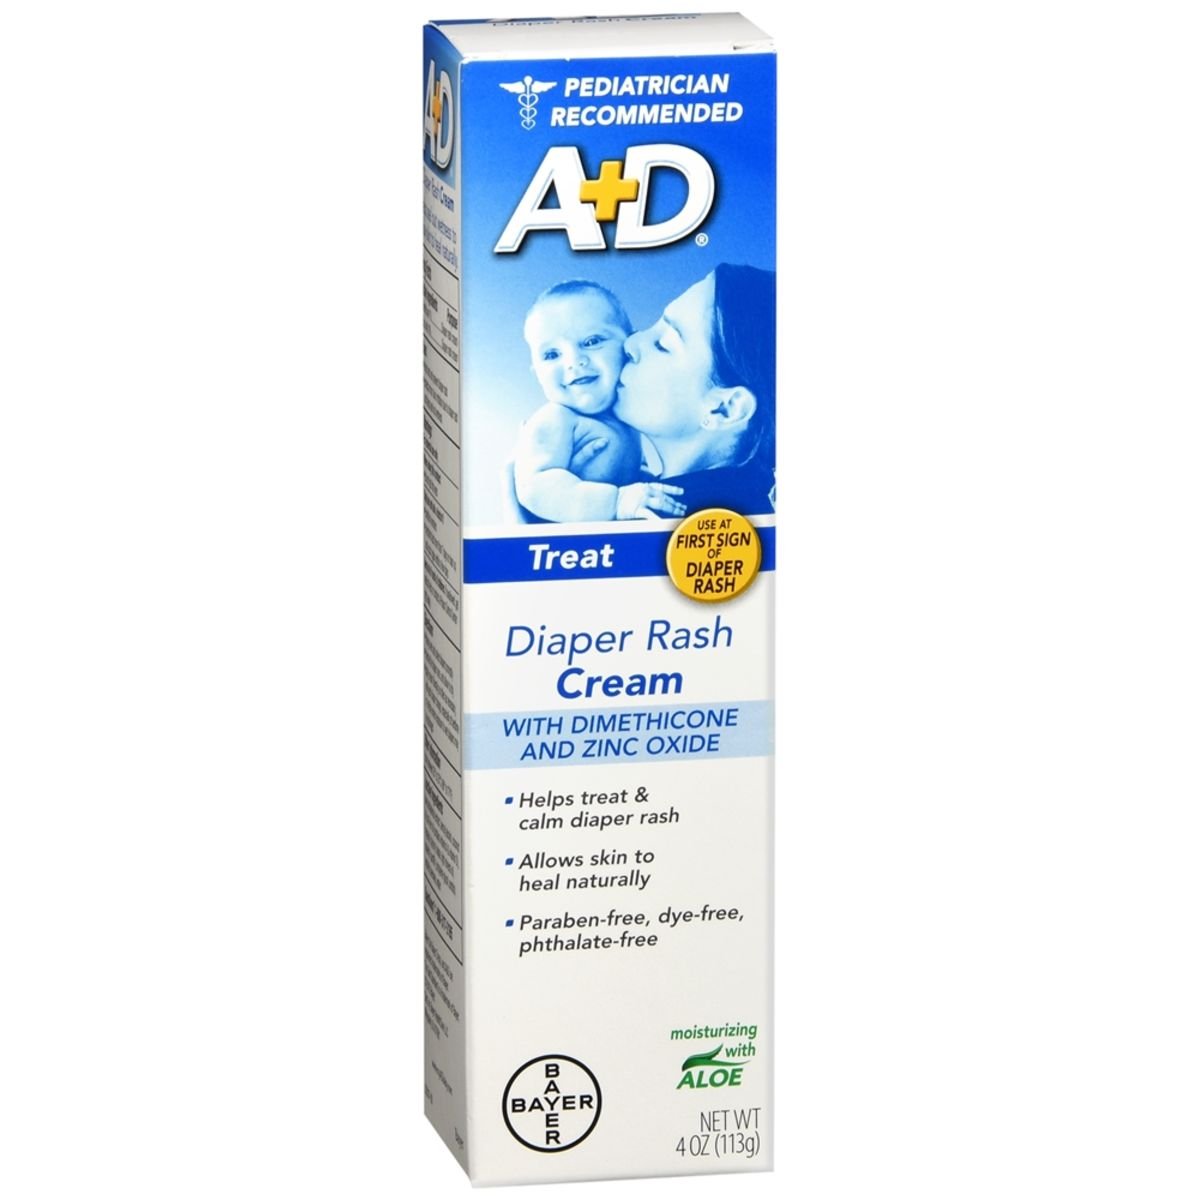 A&D Dimethicone Zinc Oxide Diaper Rash Cream